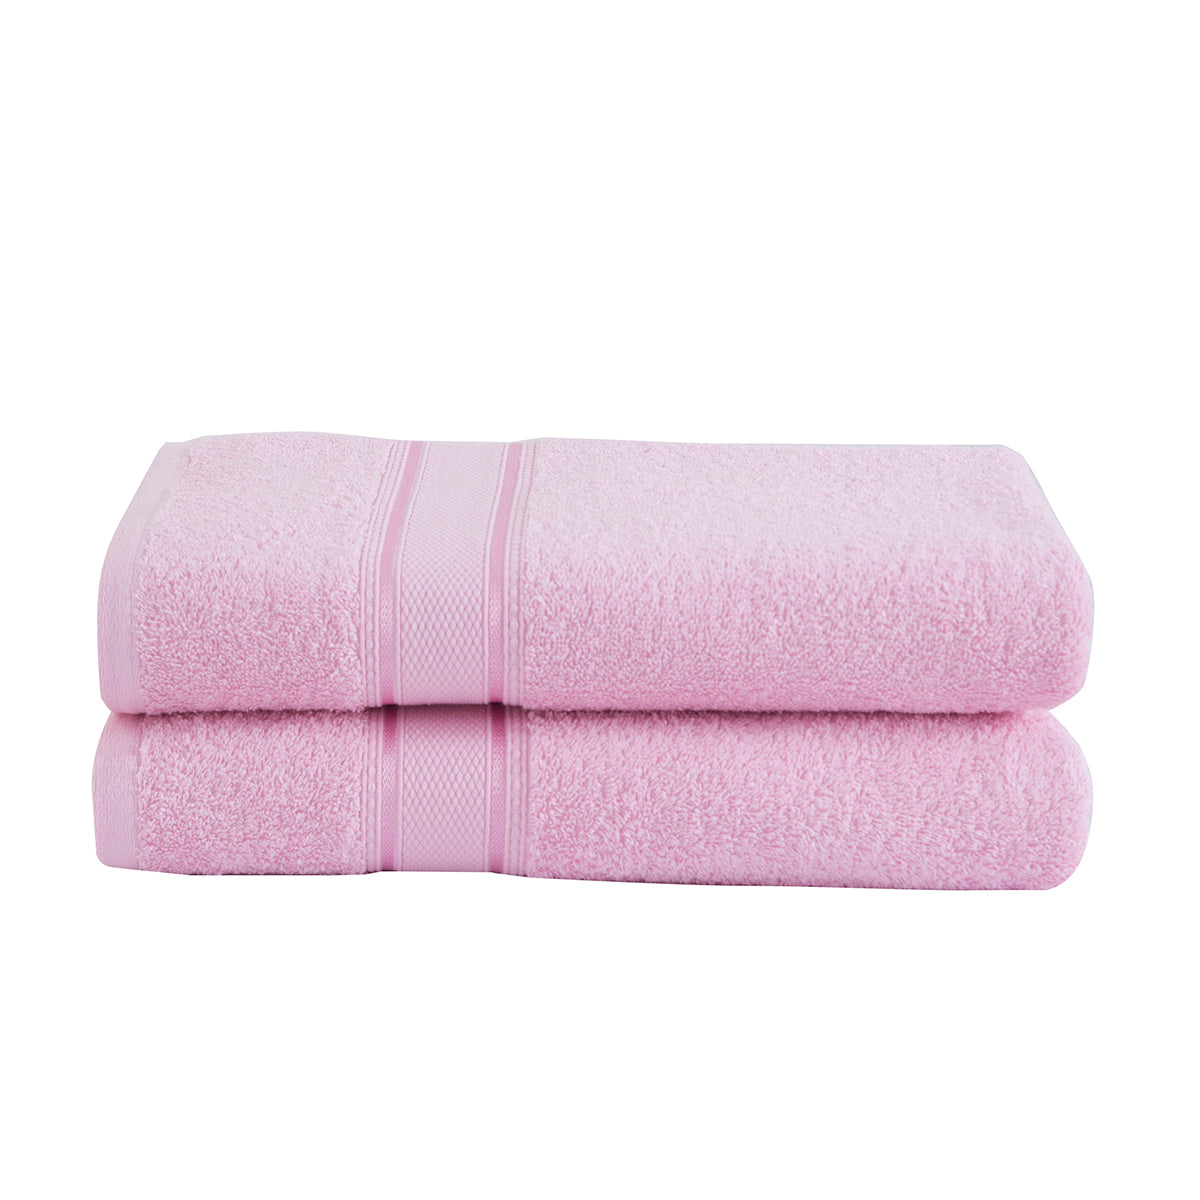 Eddie Extra Soft Pink Towel Set